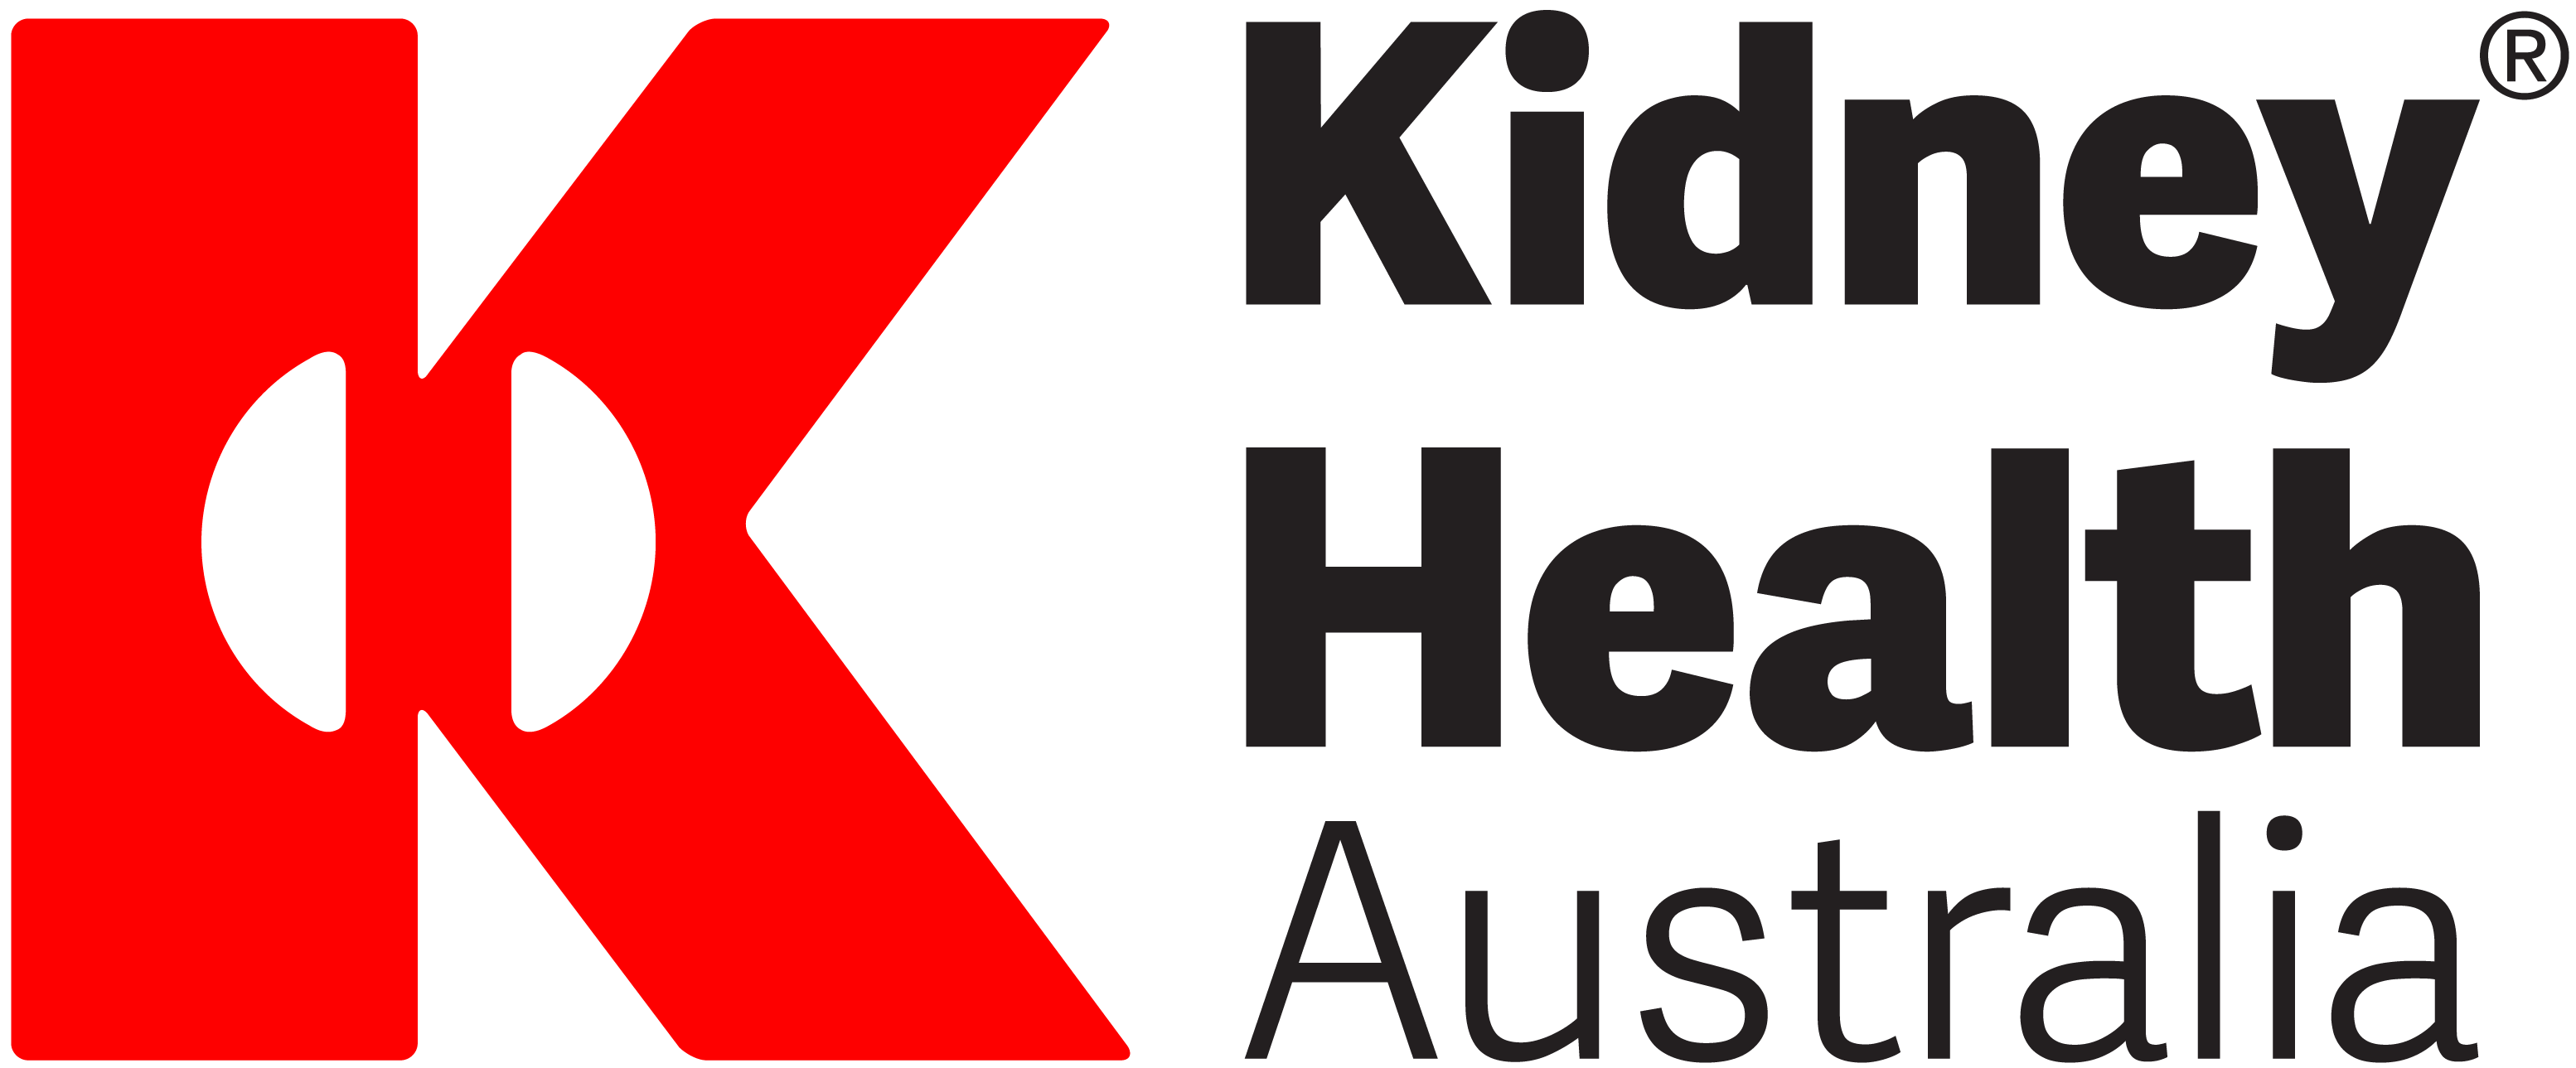 Kidney Health Australia Logo